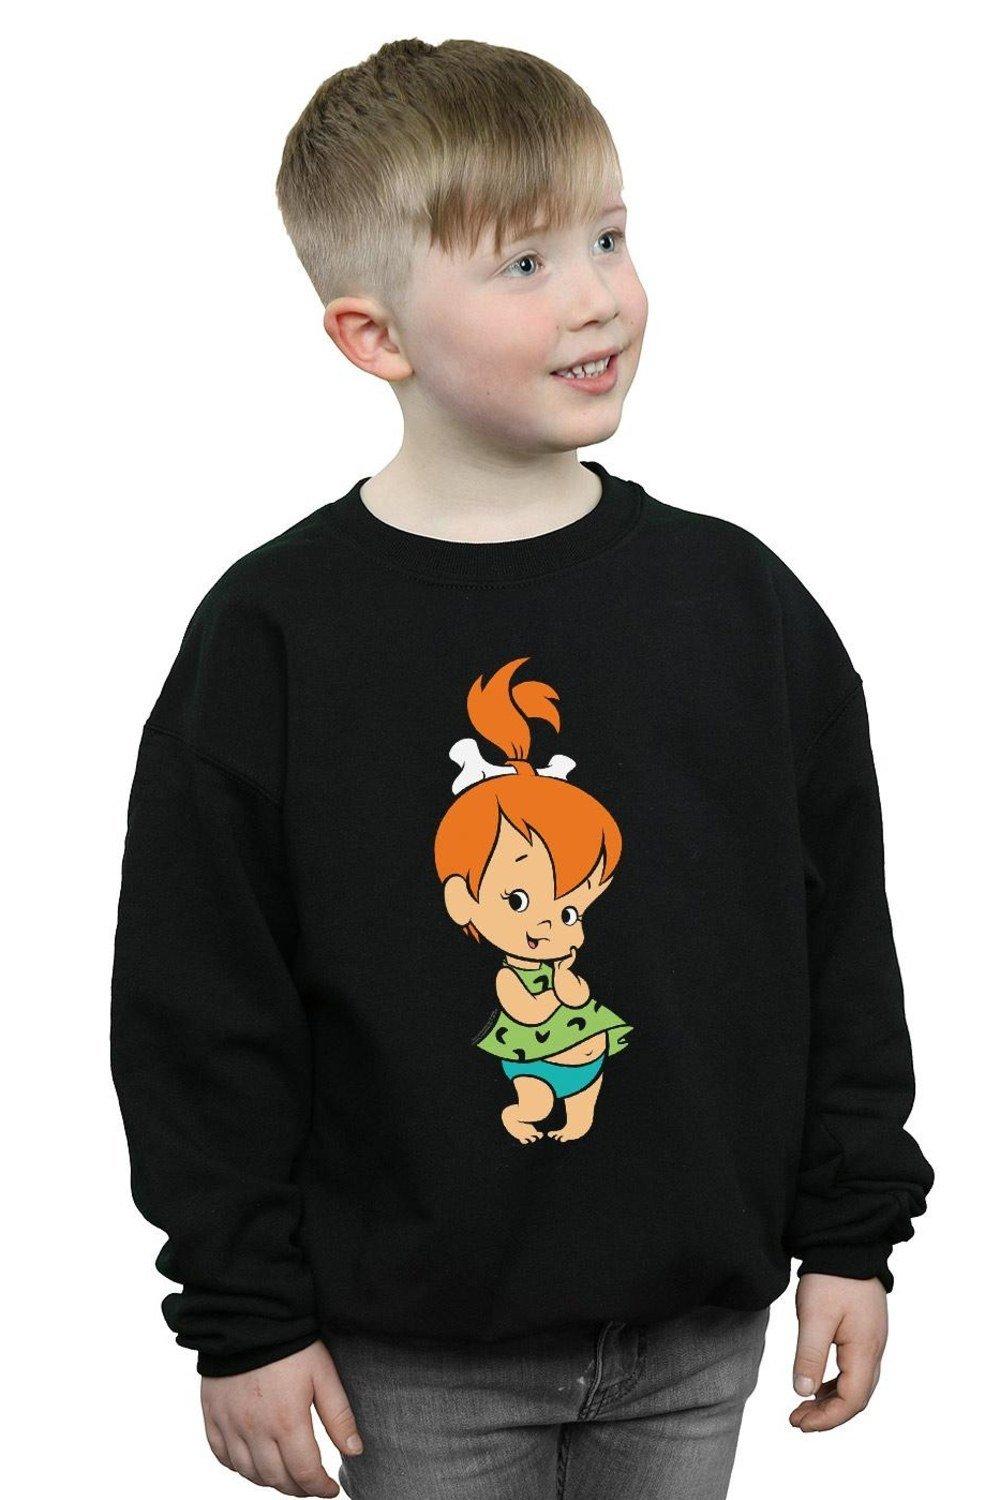 Pebbles Flintstone Sweatshirt